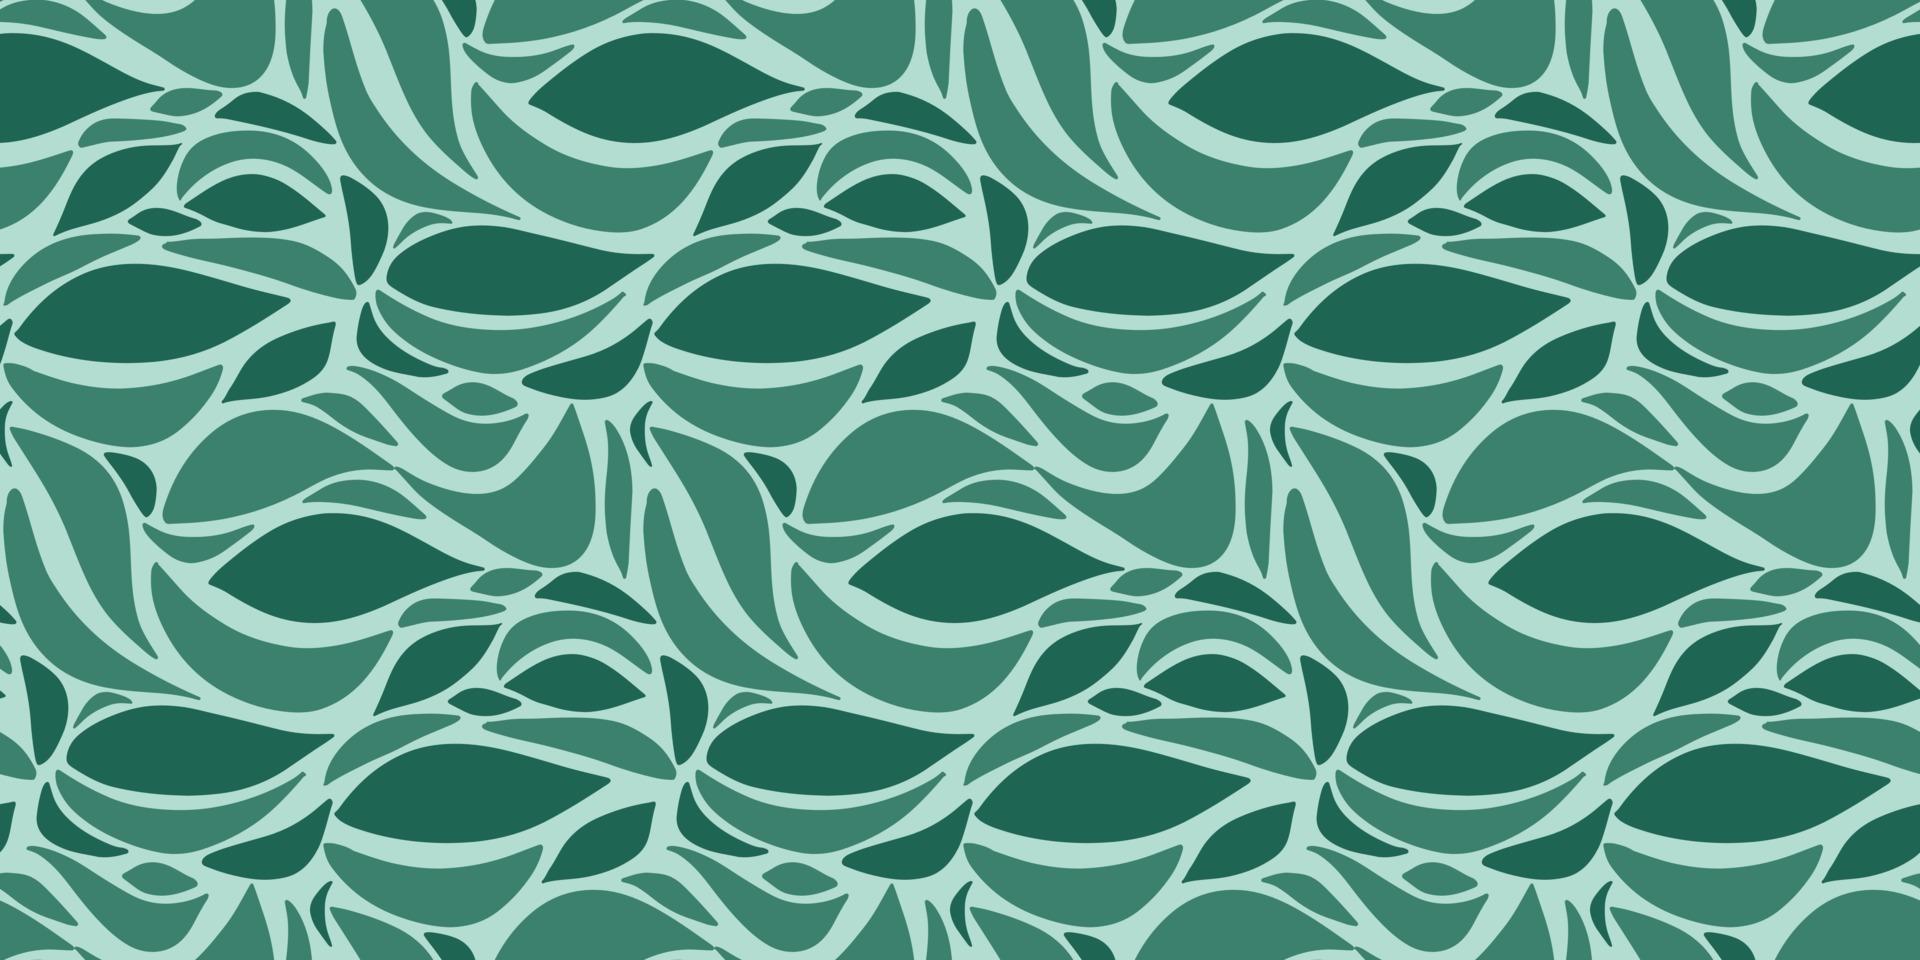 abstraktes nahtloses Muster mit grünen organischen Formen, Blättern. Vektor